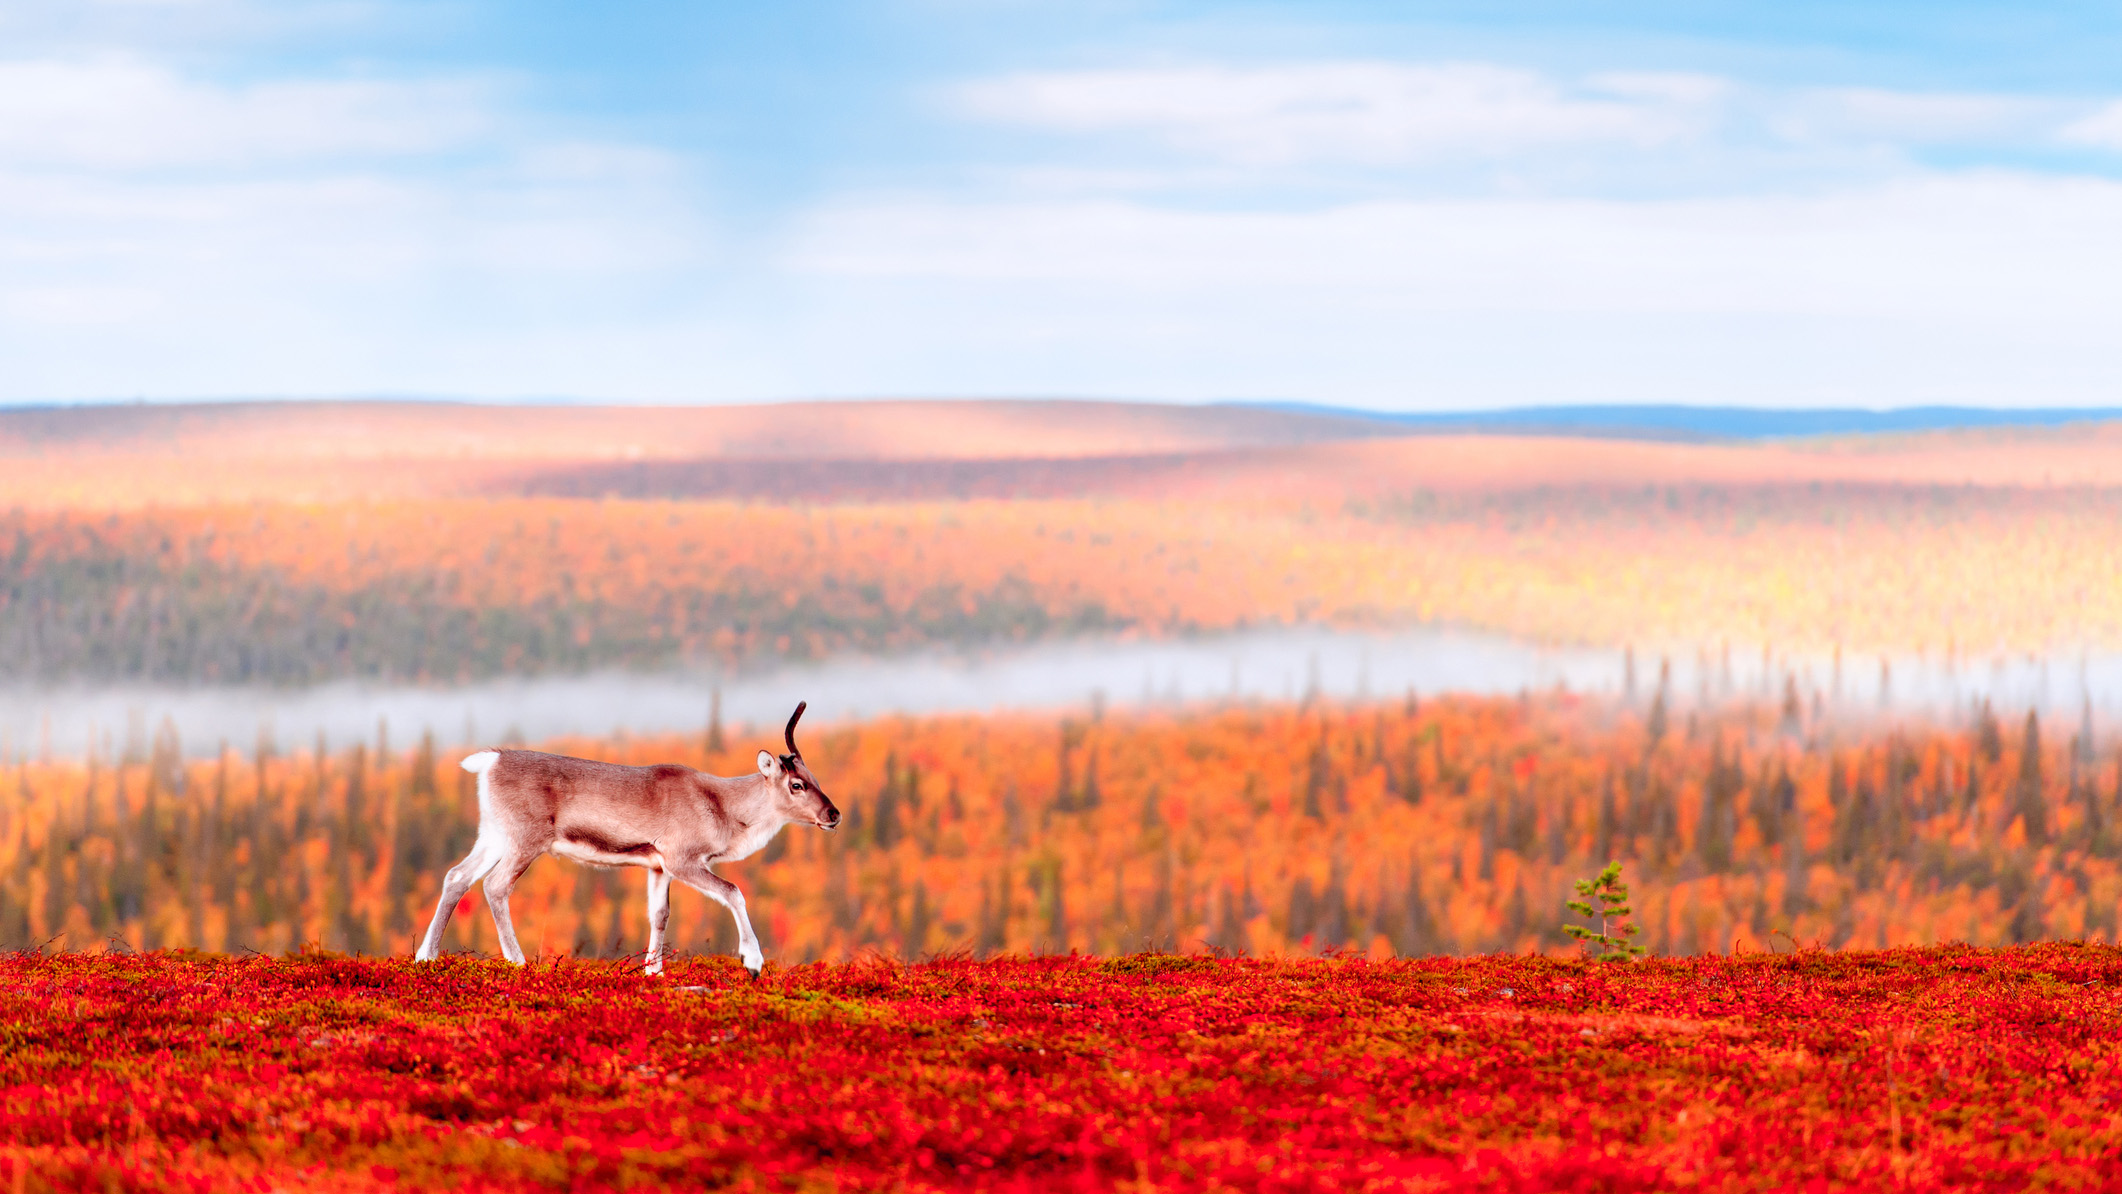 Reindeer walking in Lapland wilderness